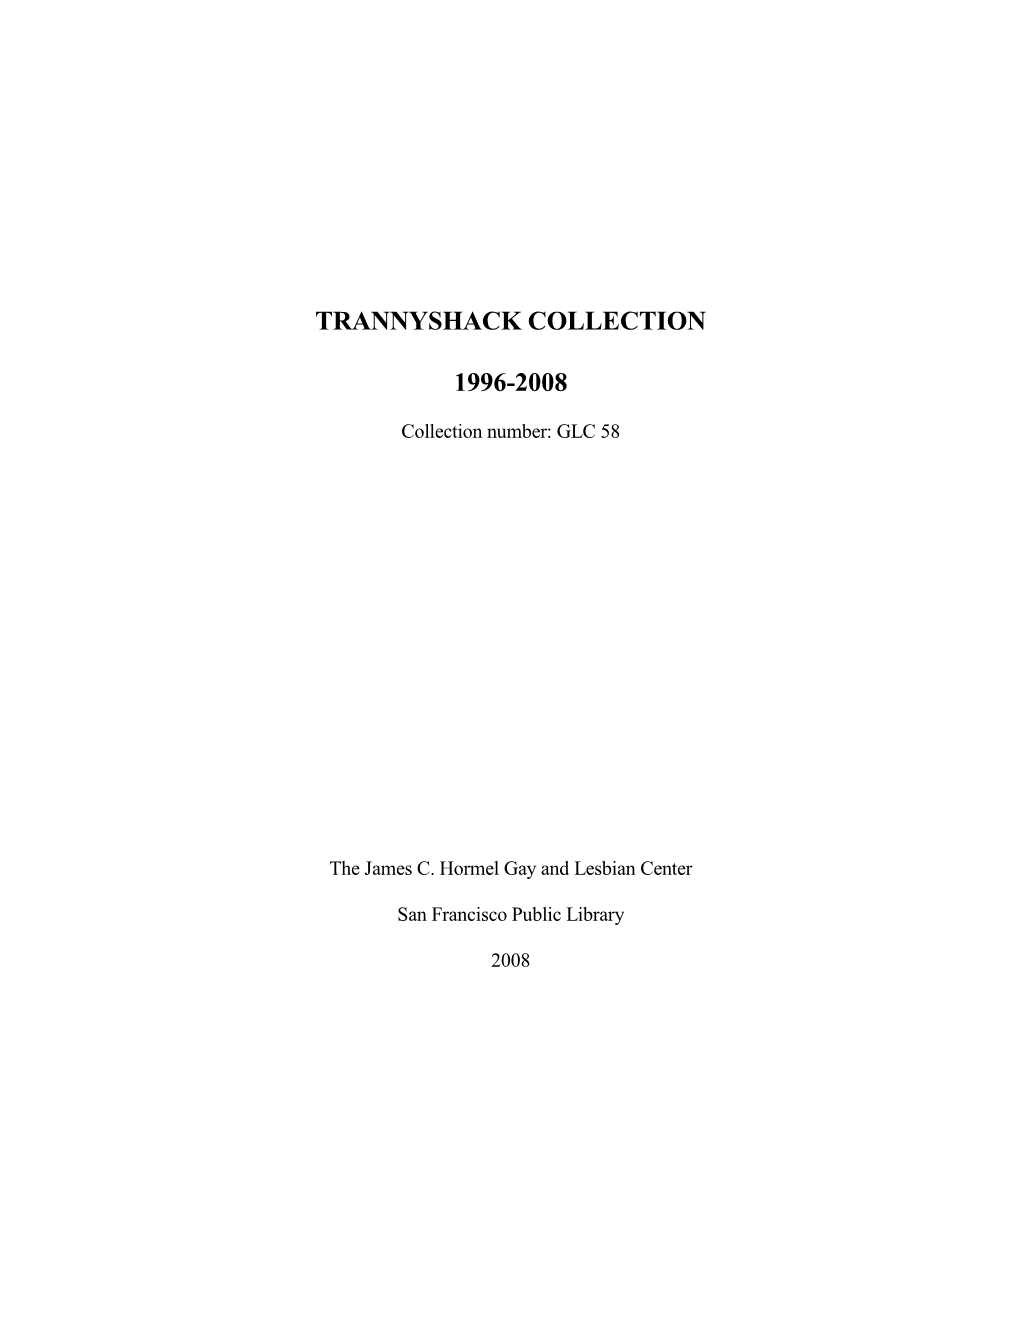 GLC 58 Trannyshack Collection